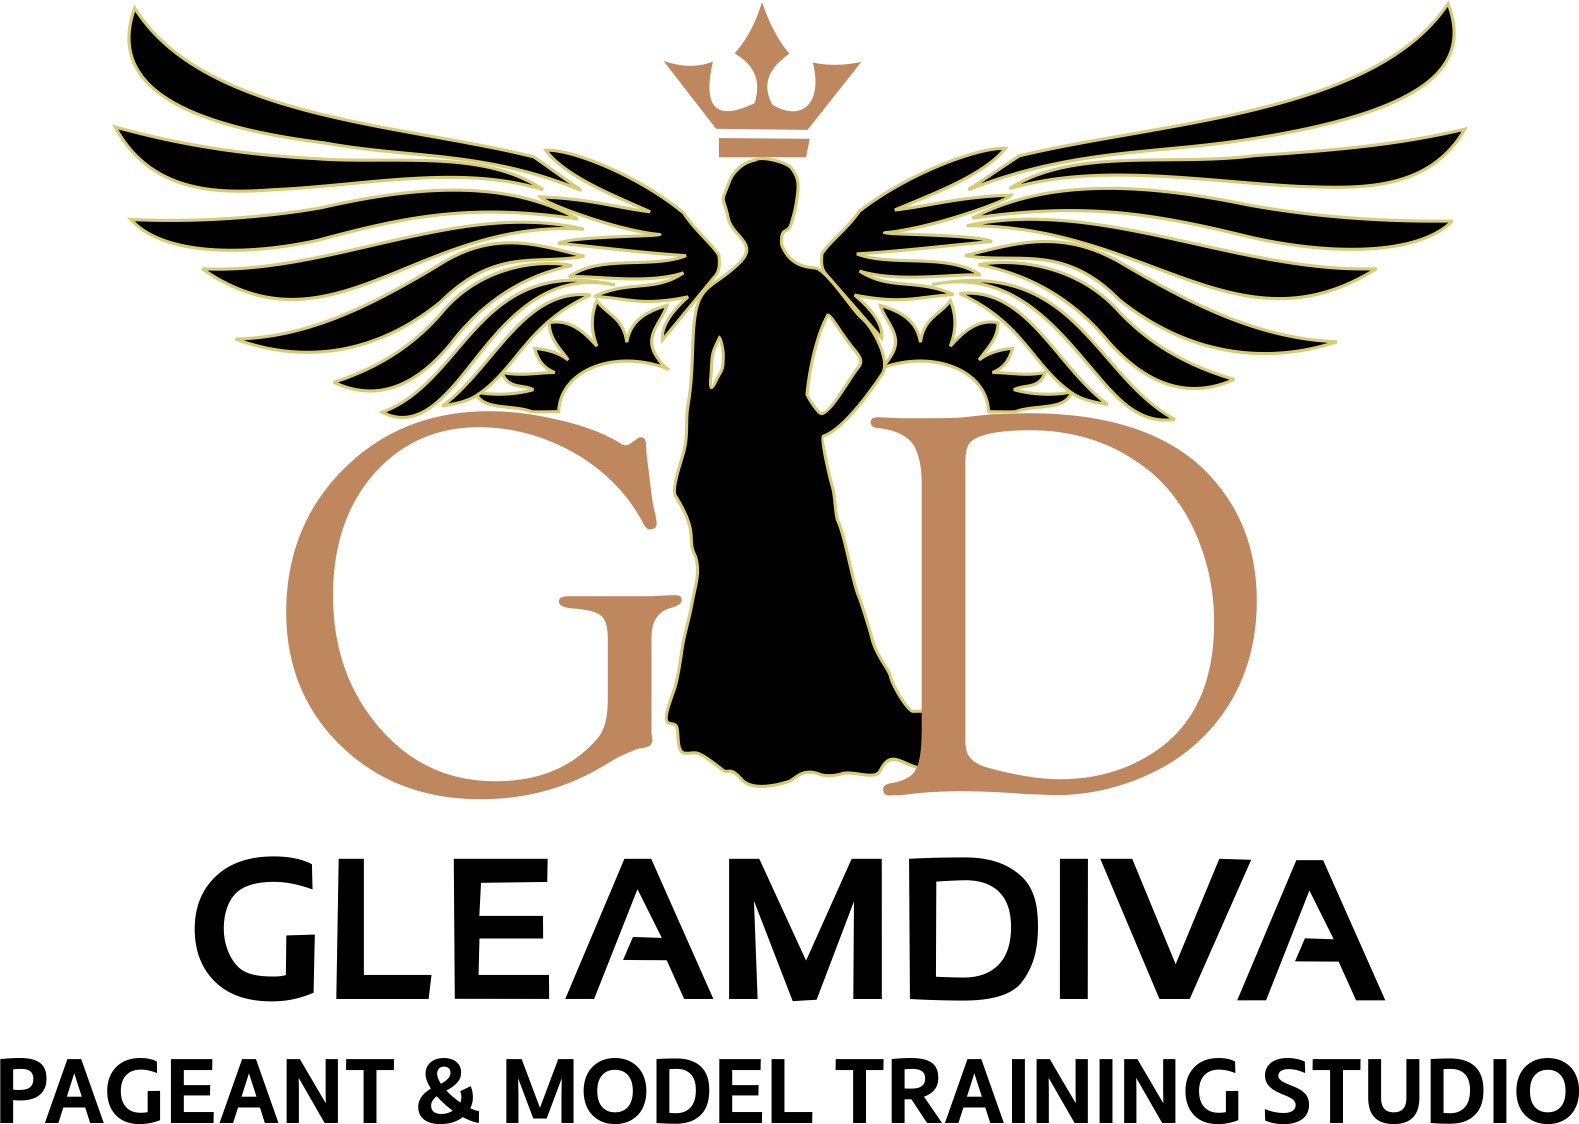 Gleamdiva logo in 4 colour (2)